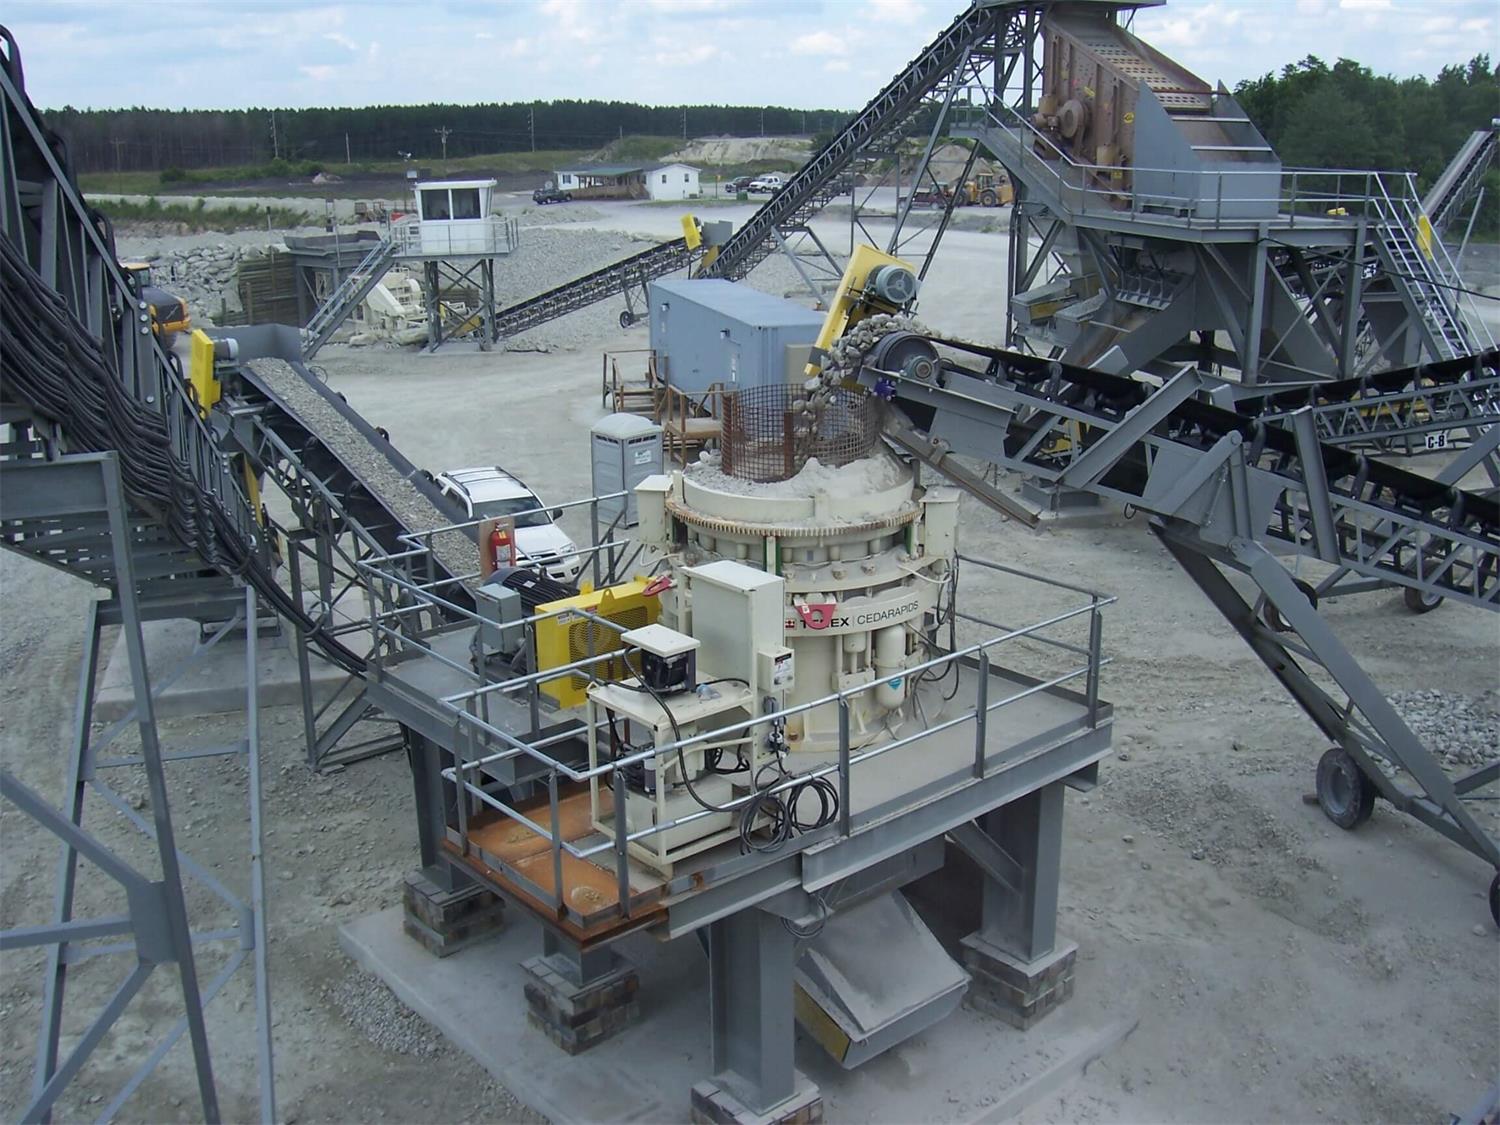 5. Mining machinery